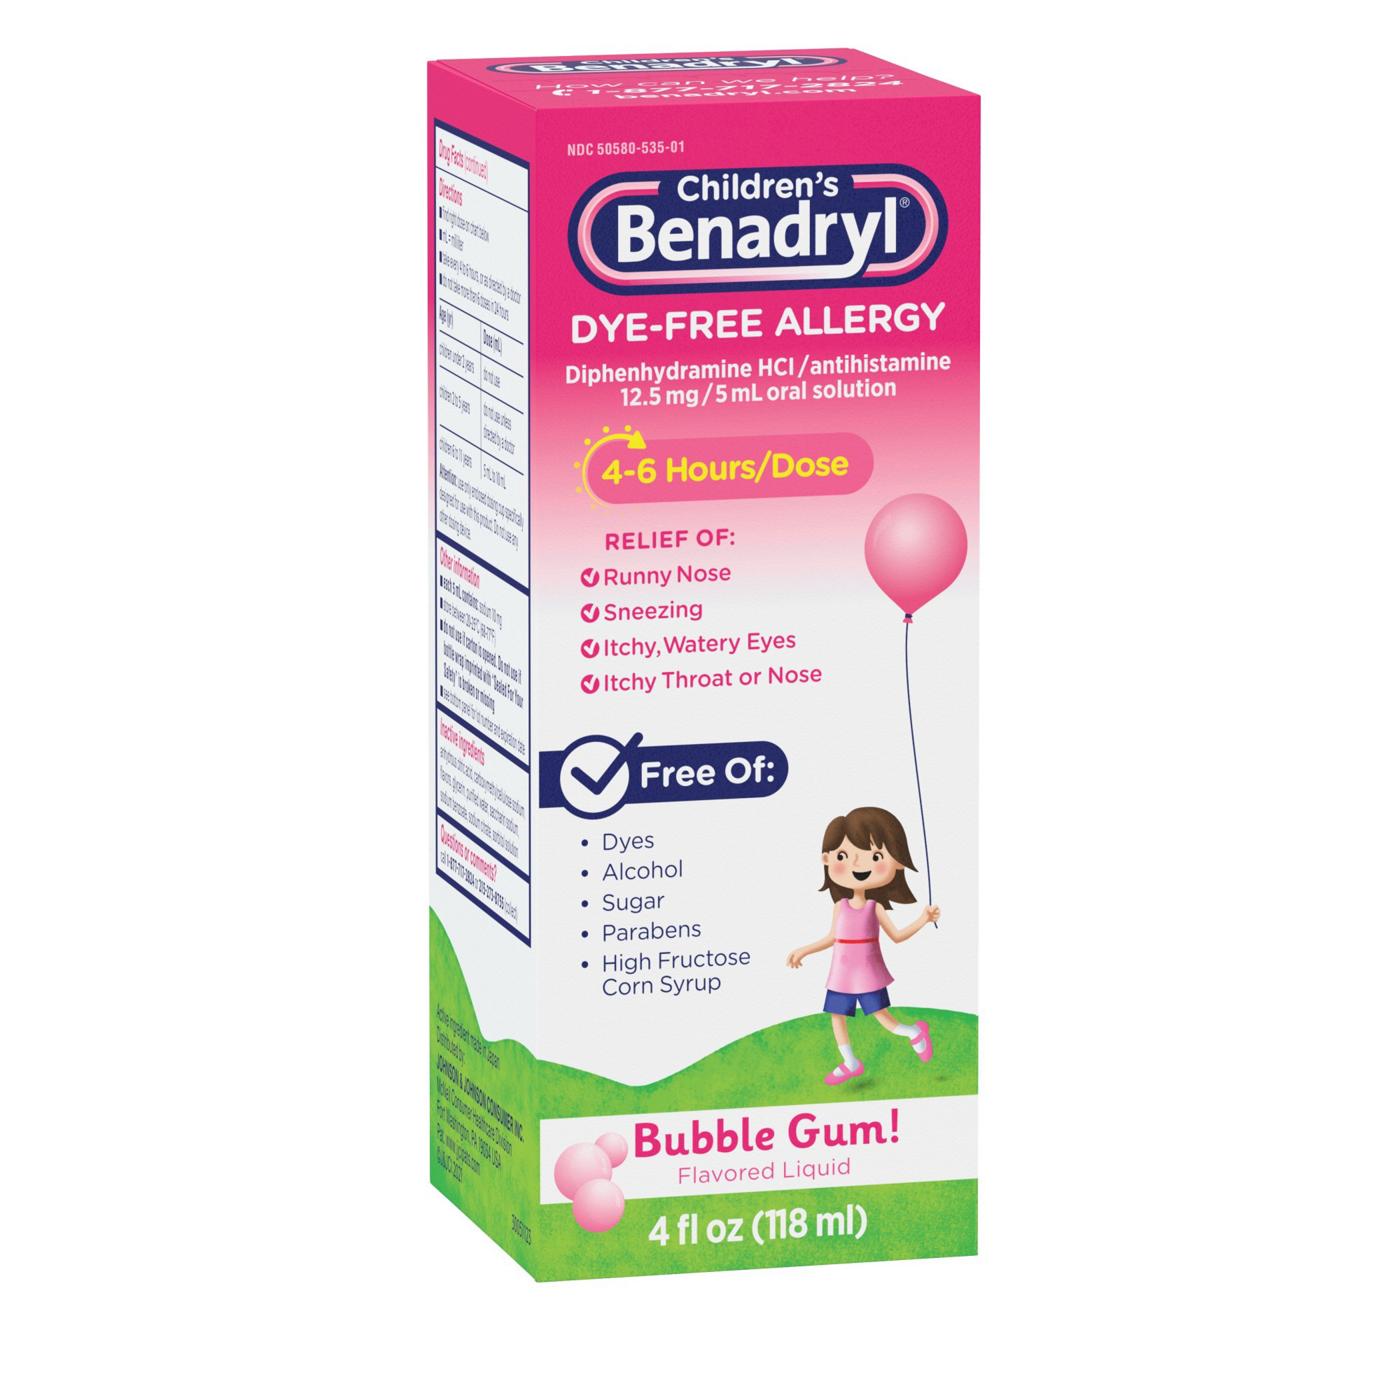 Benadryl Children's Dye-Free Allergy Liquid - Bubble Gum; image 6 of 8